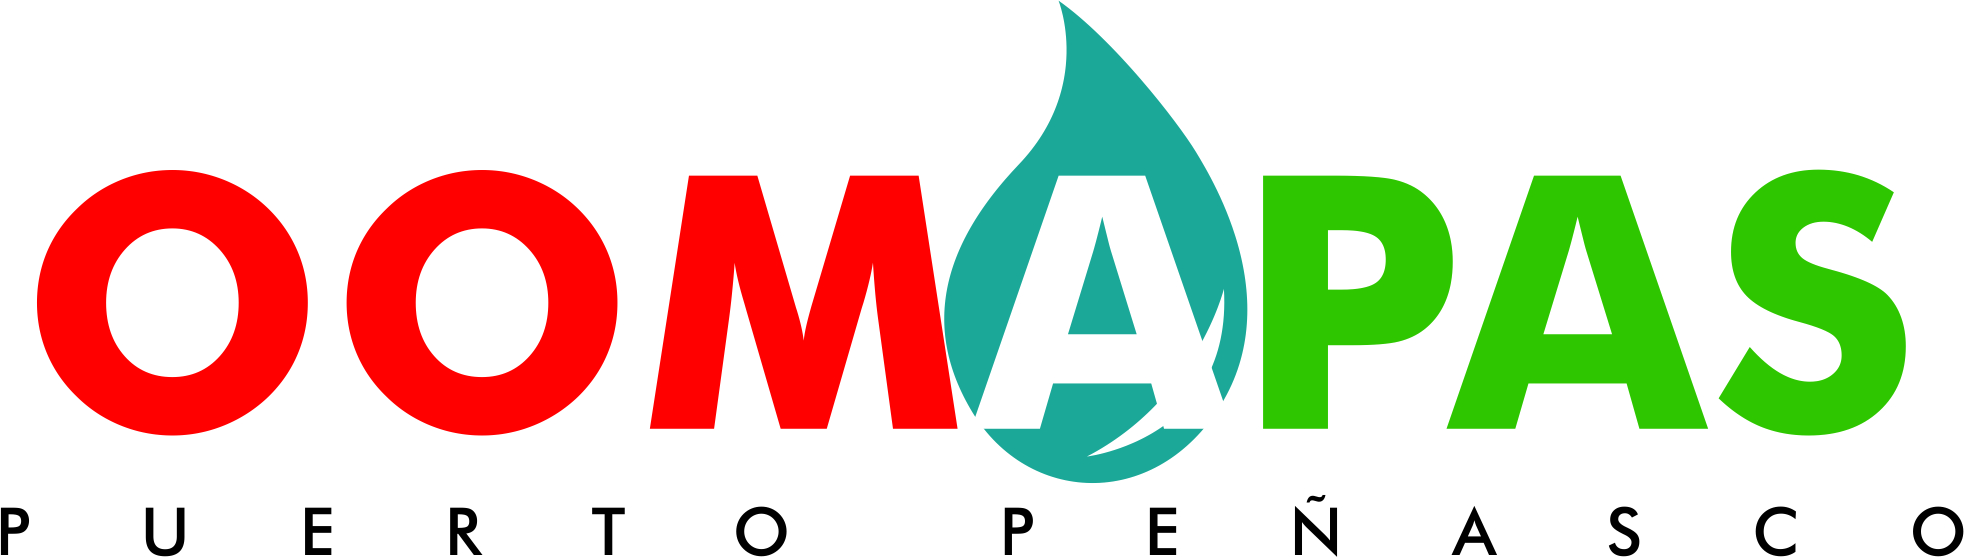 oomapas-logotipo-2012 Pipe burst may impact parts of city Saturday